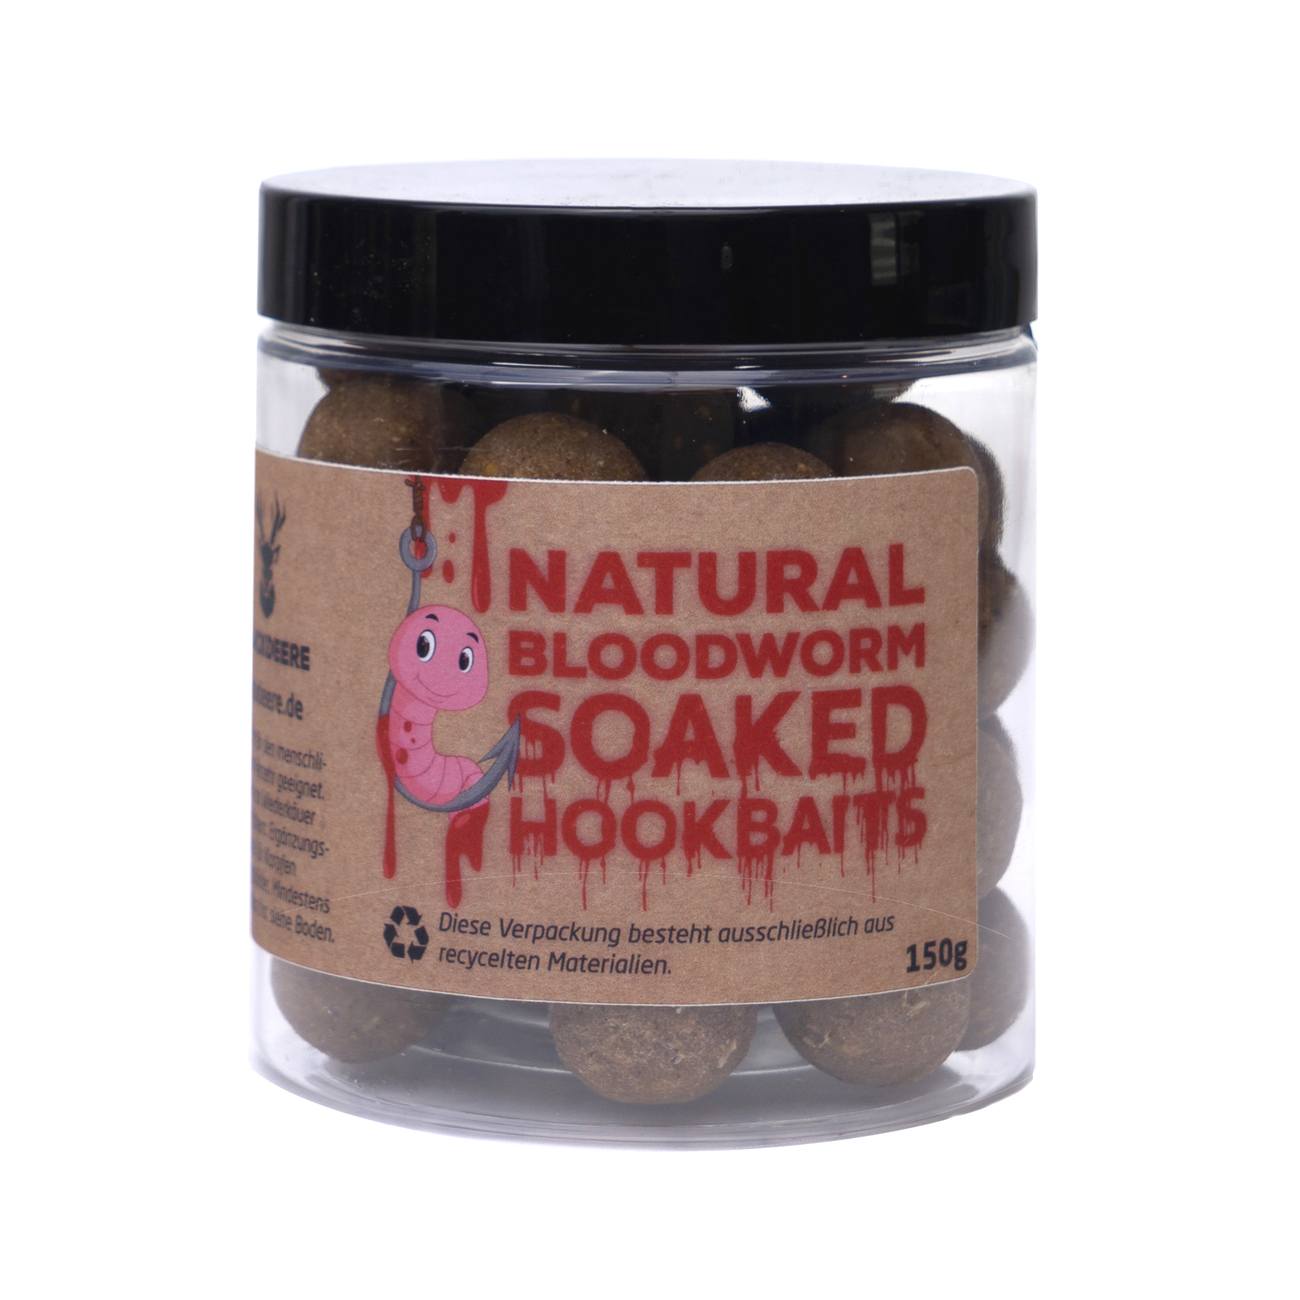 Blackdeere-Natural-Bloodworm-Hookbaits-2